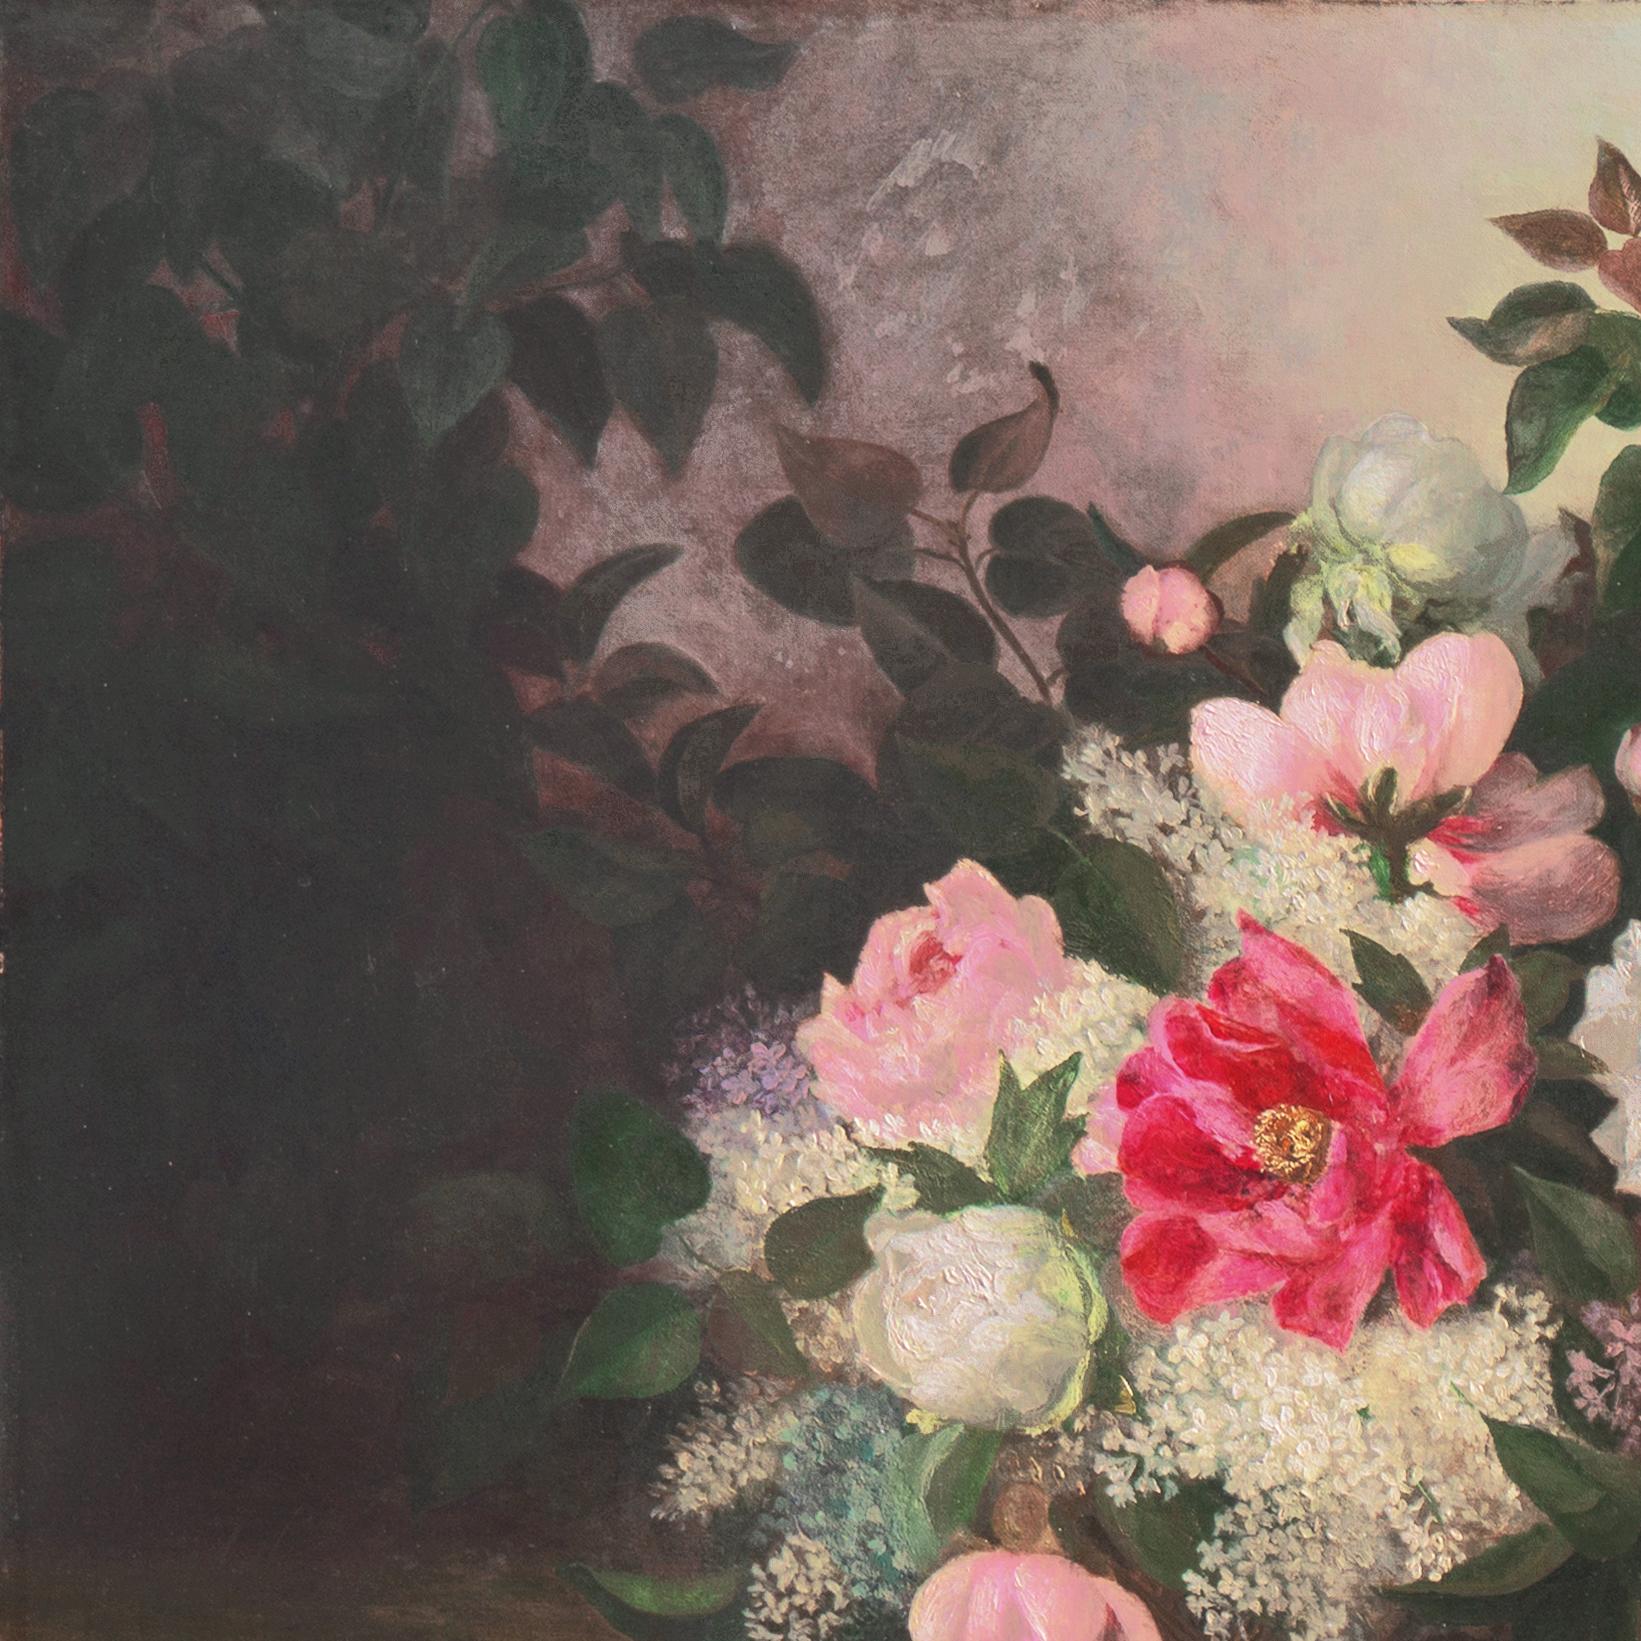 'Basket of Flowers', Large, 19th century, American School, Oil Still Life, Roses - American Realist Painting by American School, 19th Century